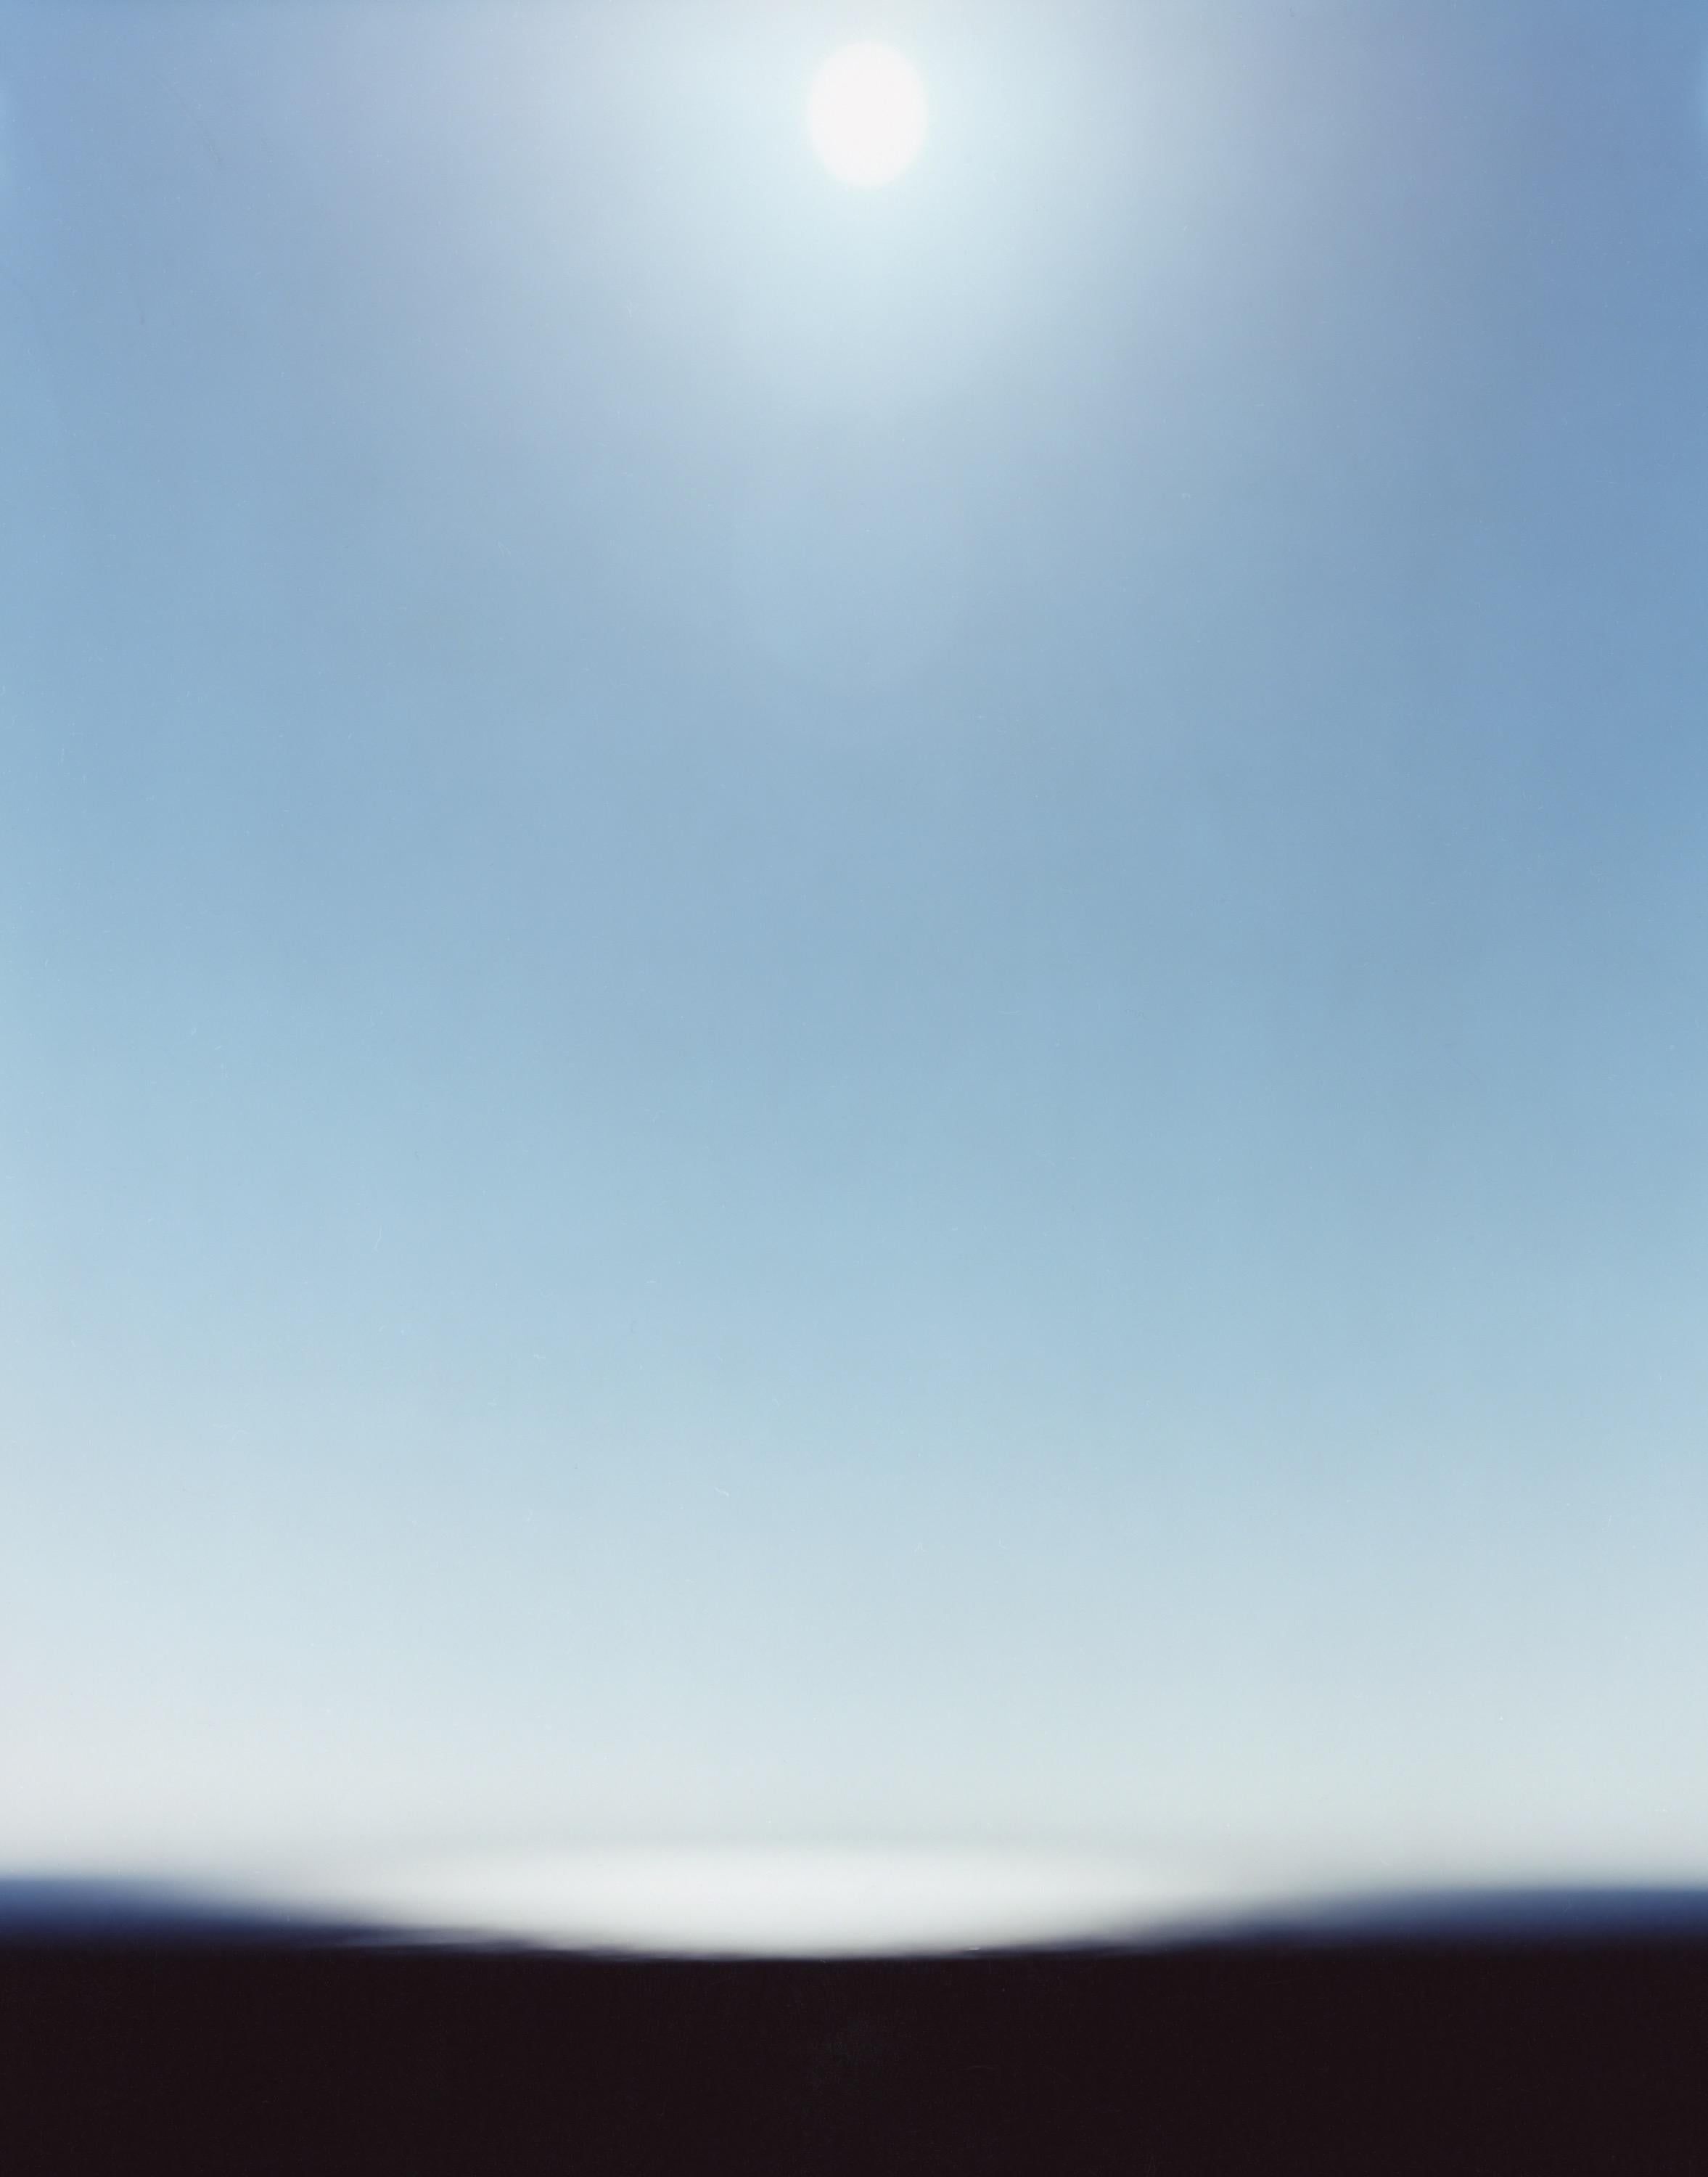 Between the Sea and the Mountain – Kumano 14, DK-262 – Risaku Suzuki, Sky, Sun